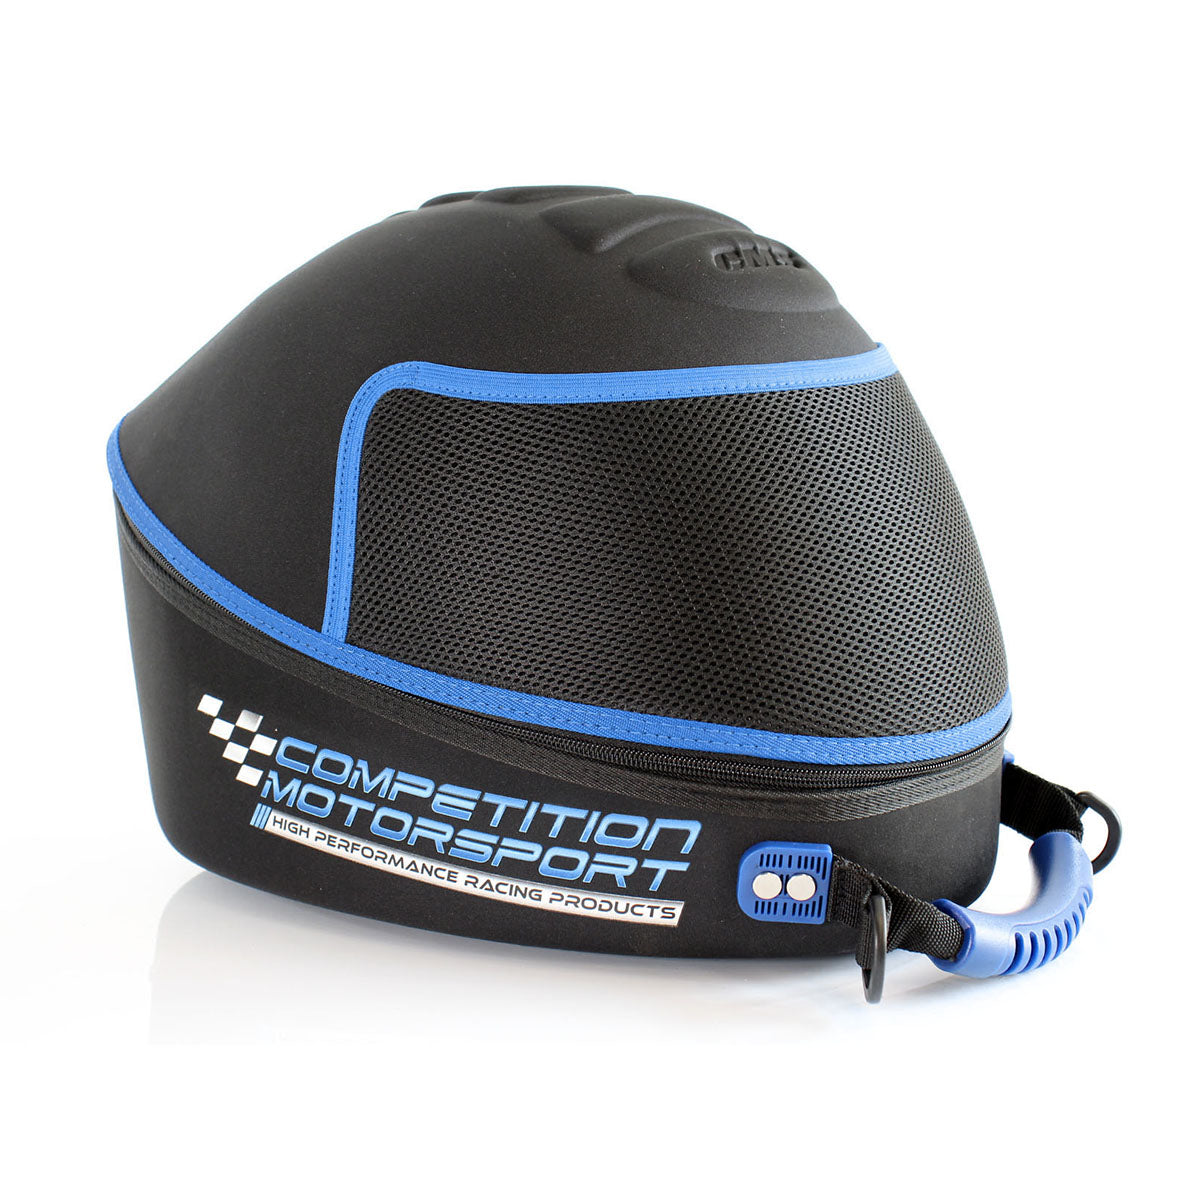 "CMS Performance Racing Helmet Bag - Durable and Stylish Helmet Storage"